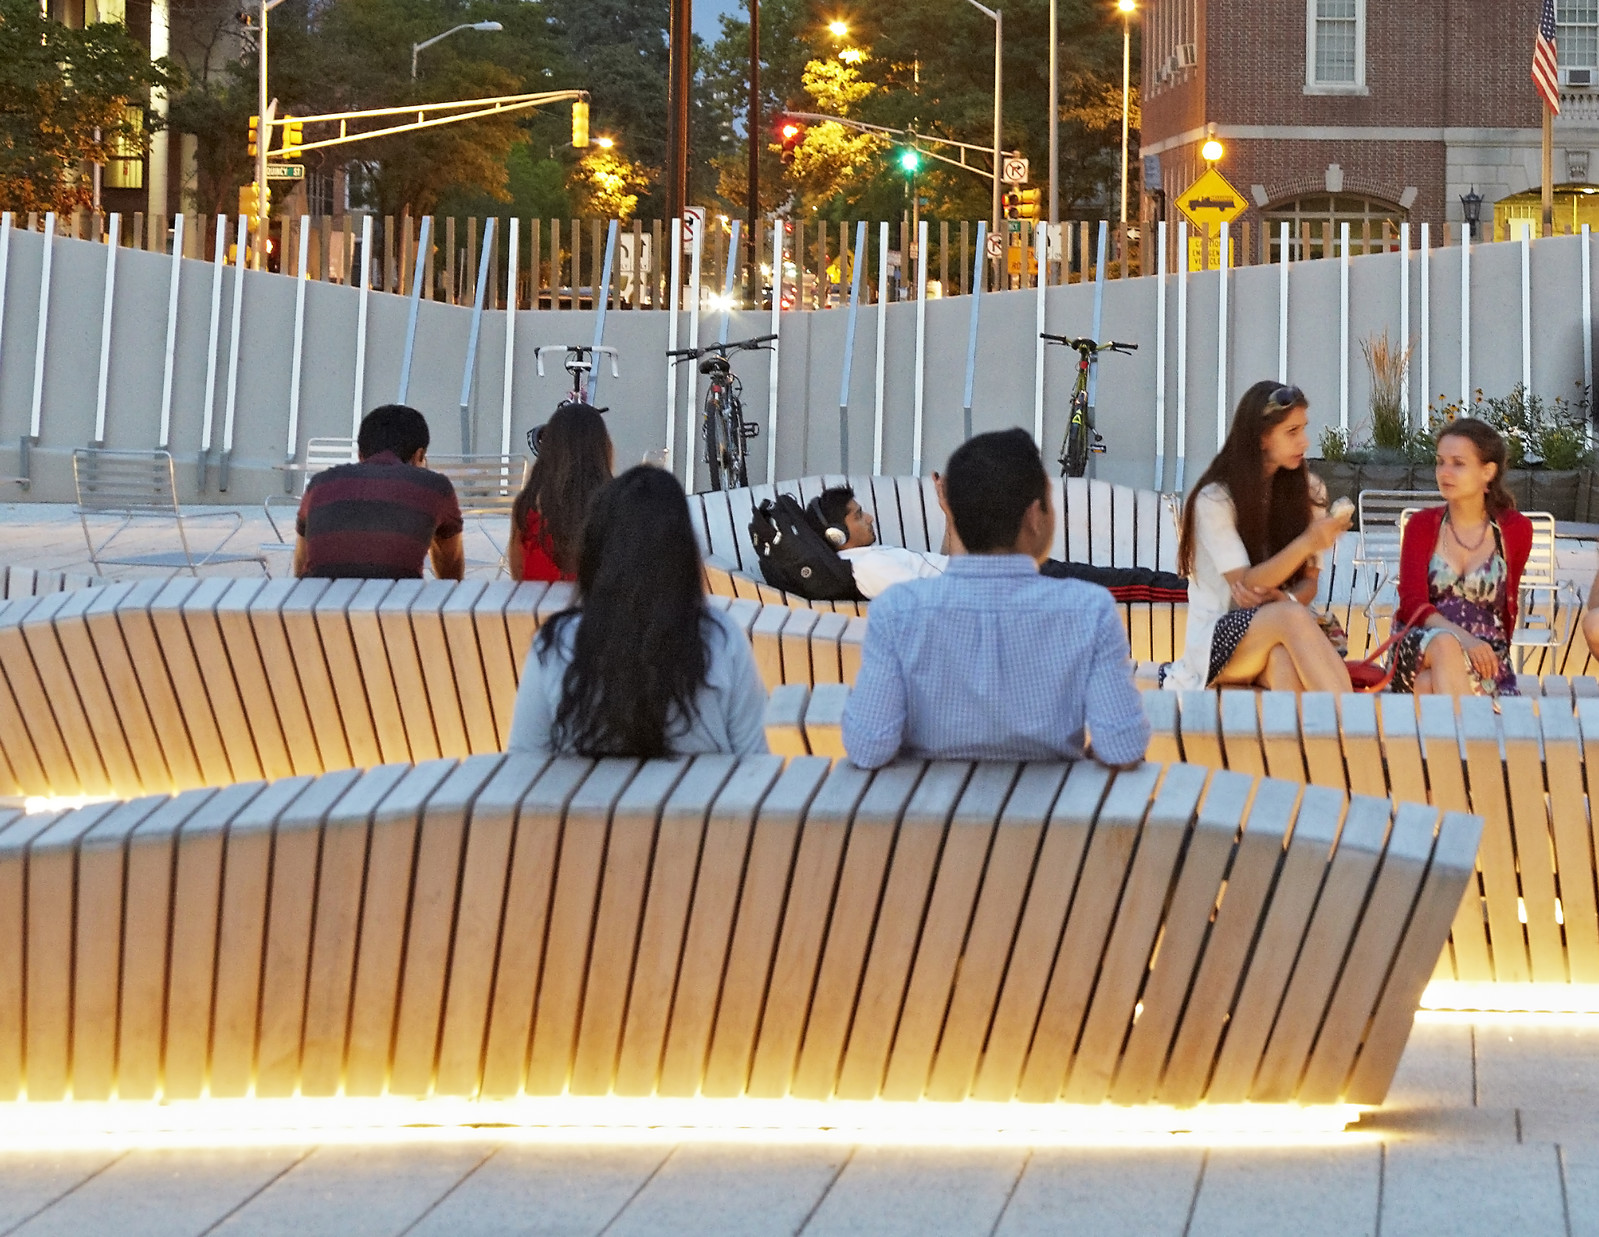 The Harvard University benches at night